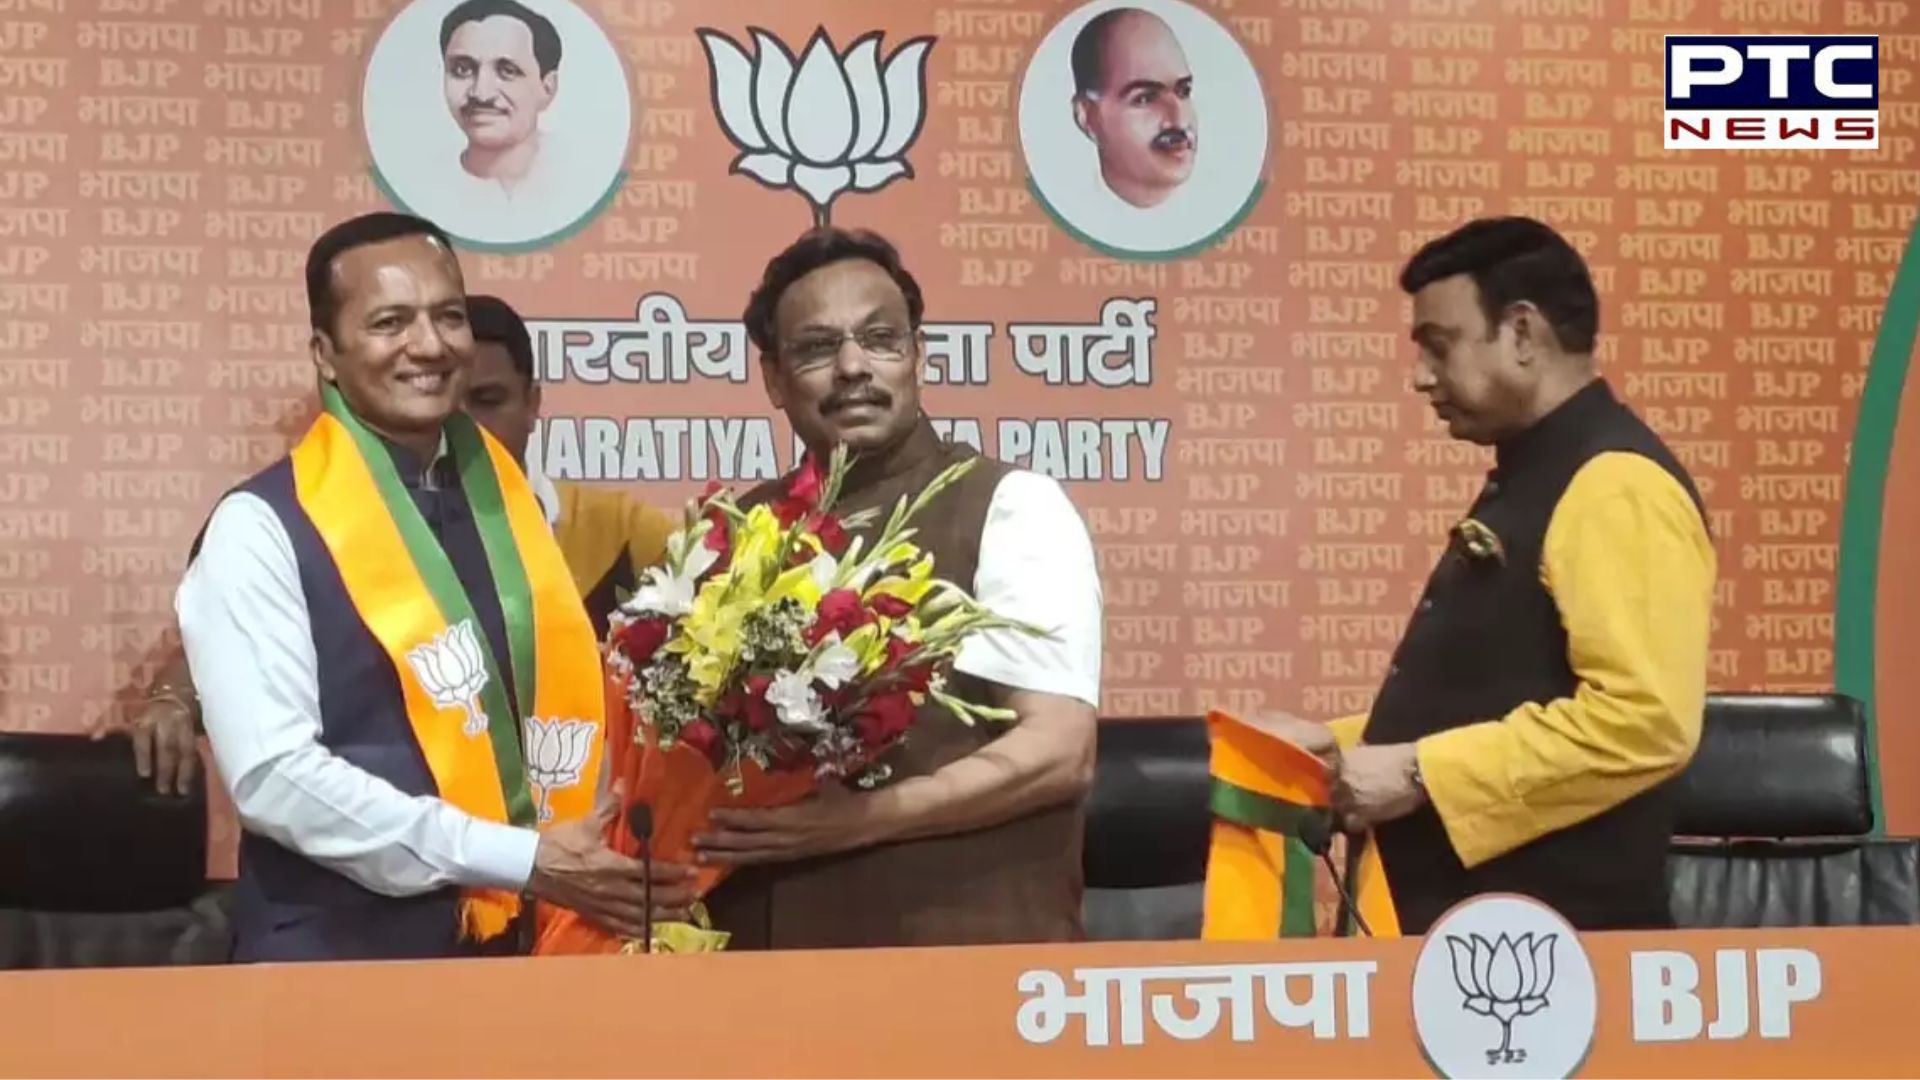 Former Congress MP from Kurukshetra Naveen Jindal joins BJP